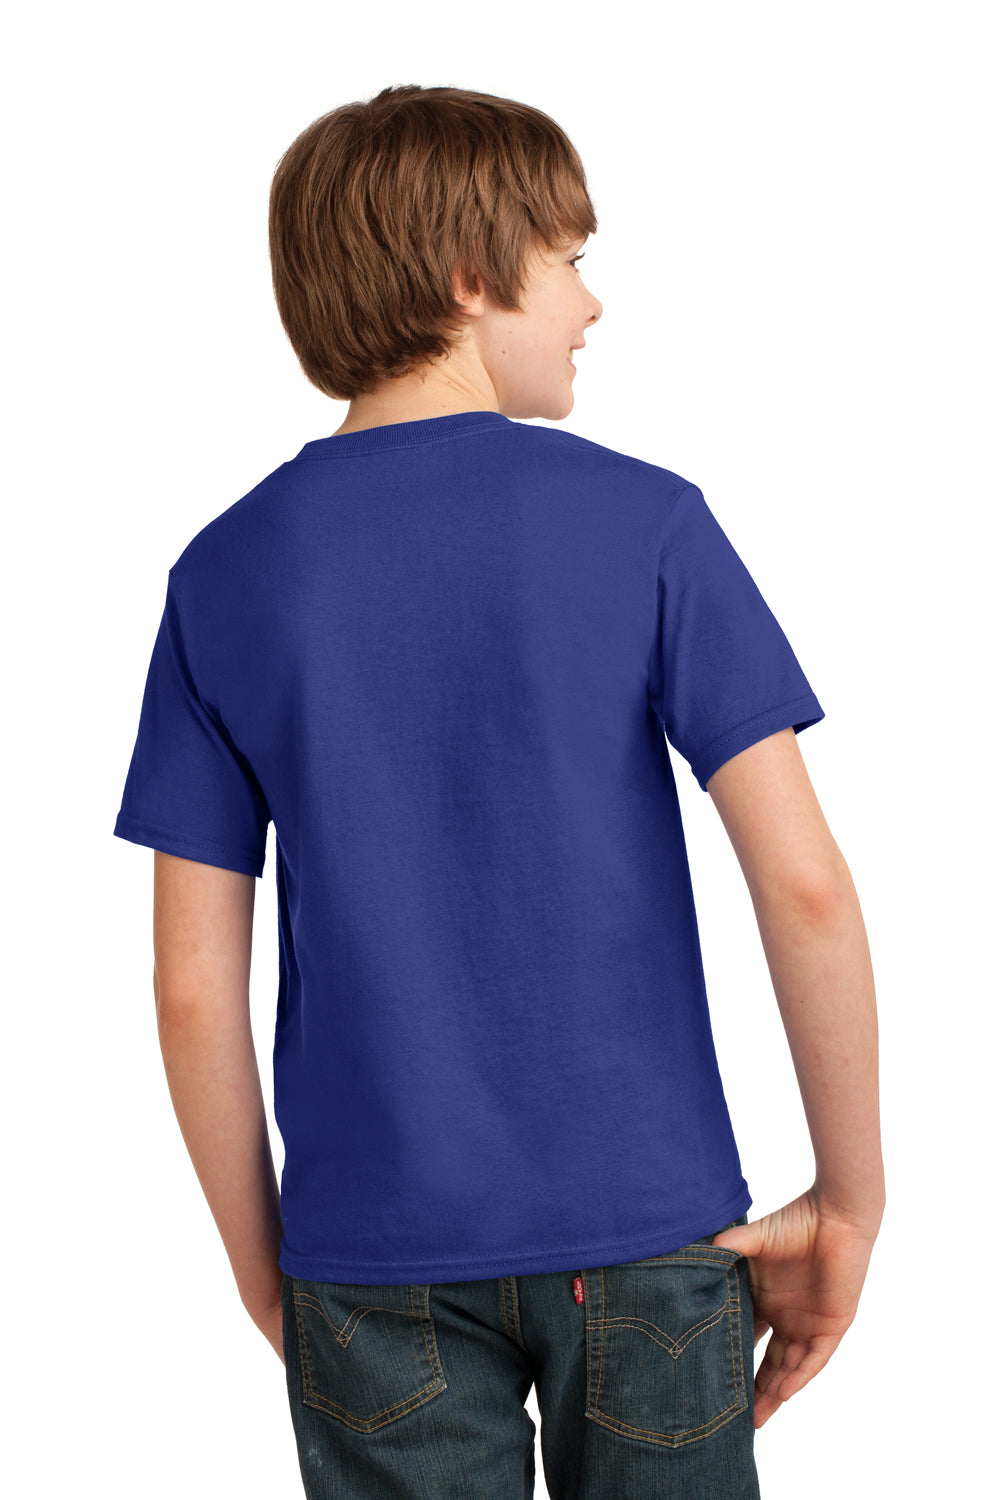 Port & Company PC61Y Youth Essential Short Sleeve Crewneck T-Shirt Deep Marine Blue Back